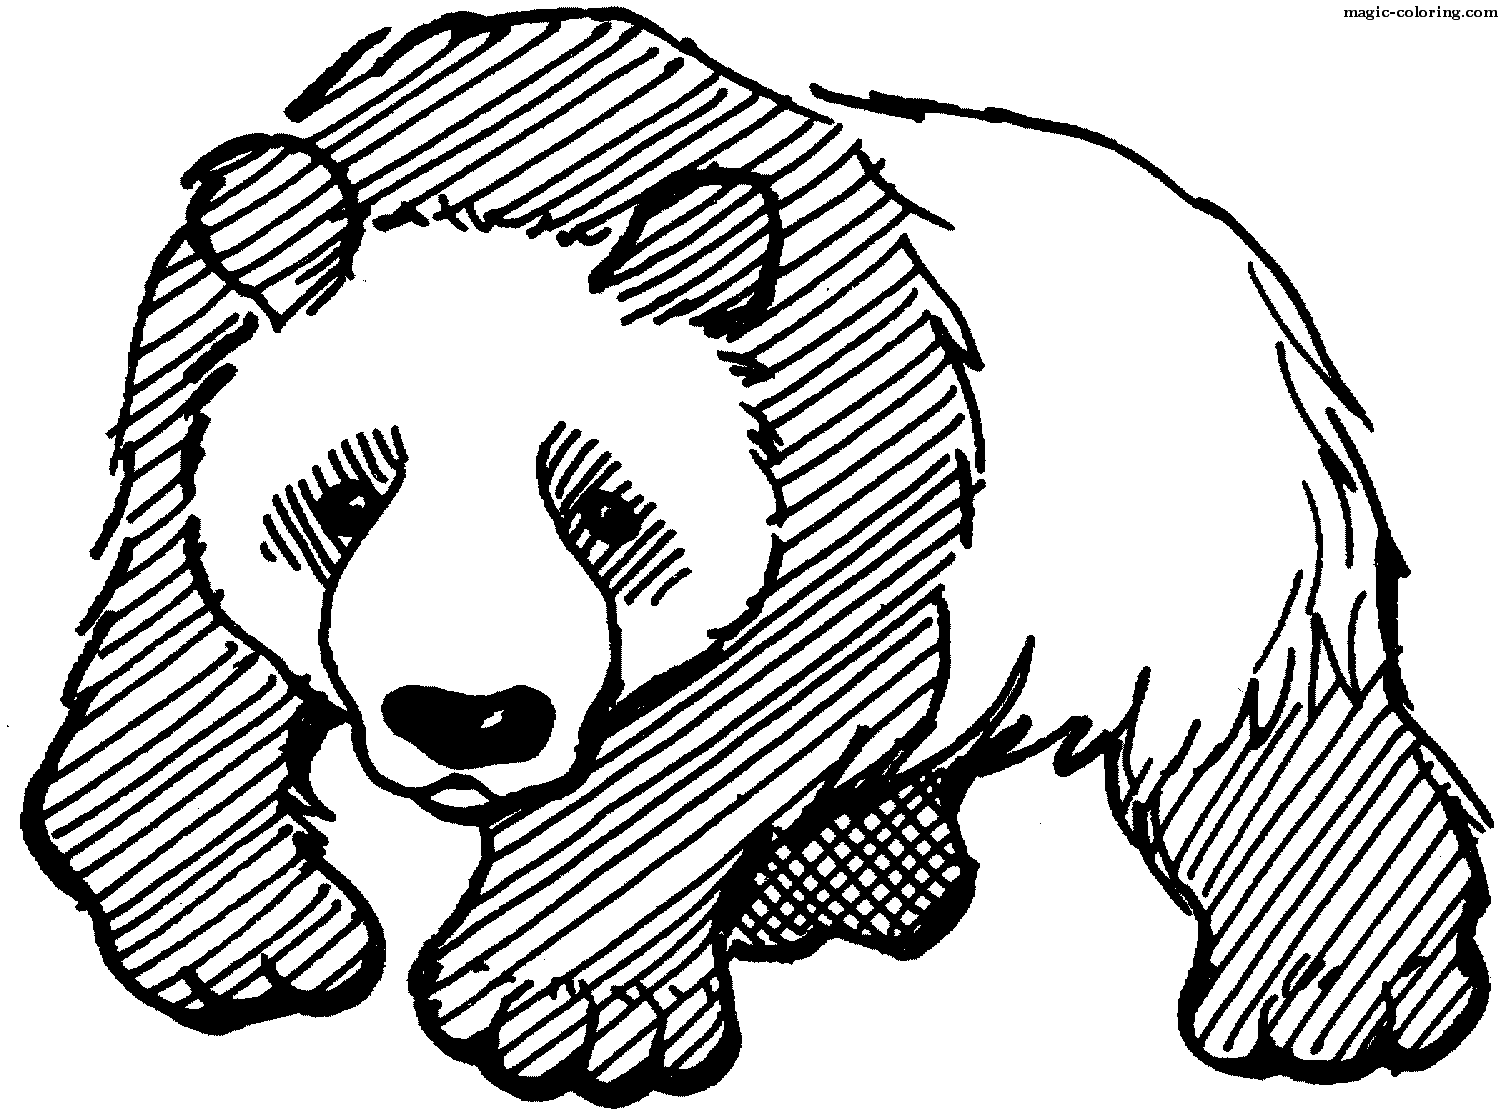 Sad Panda Waiting for Coloring